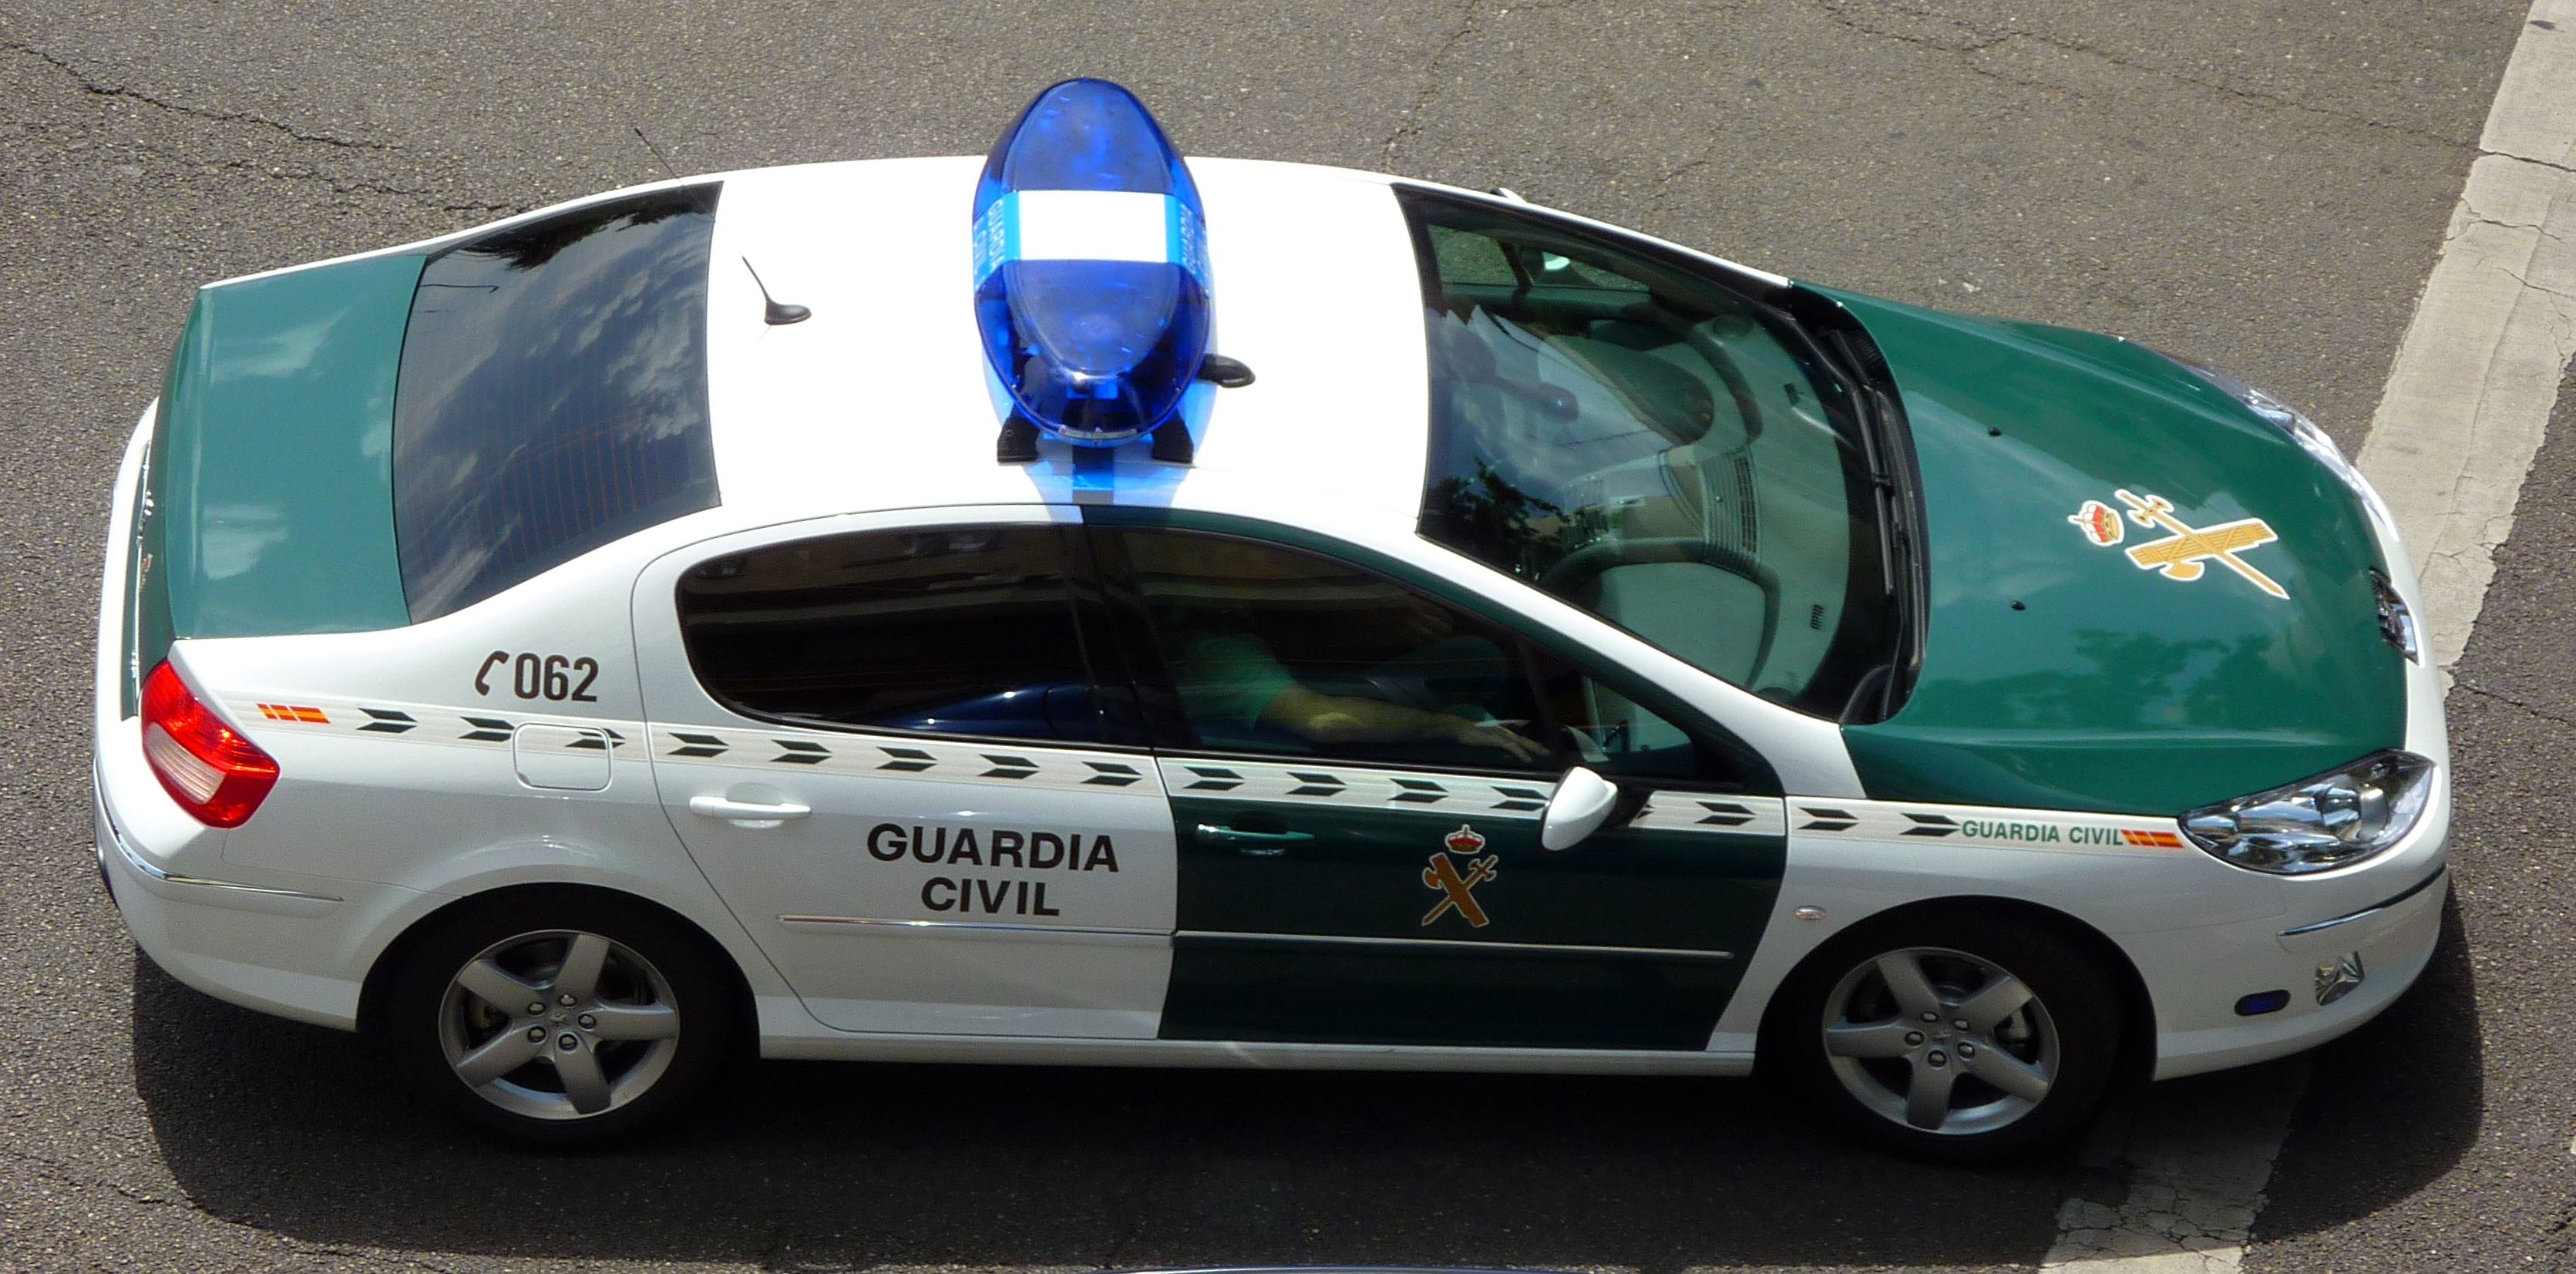 Guardia Civil Wikipedia